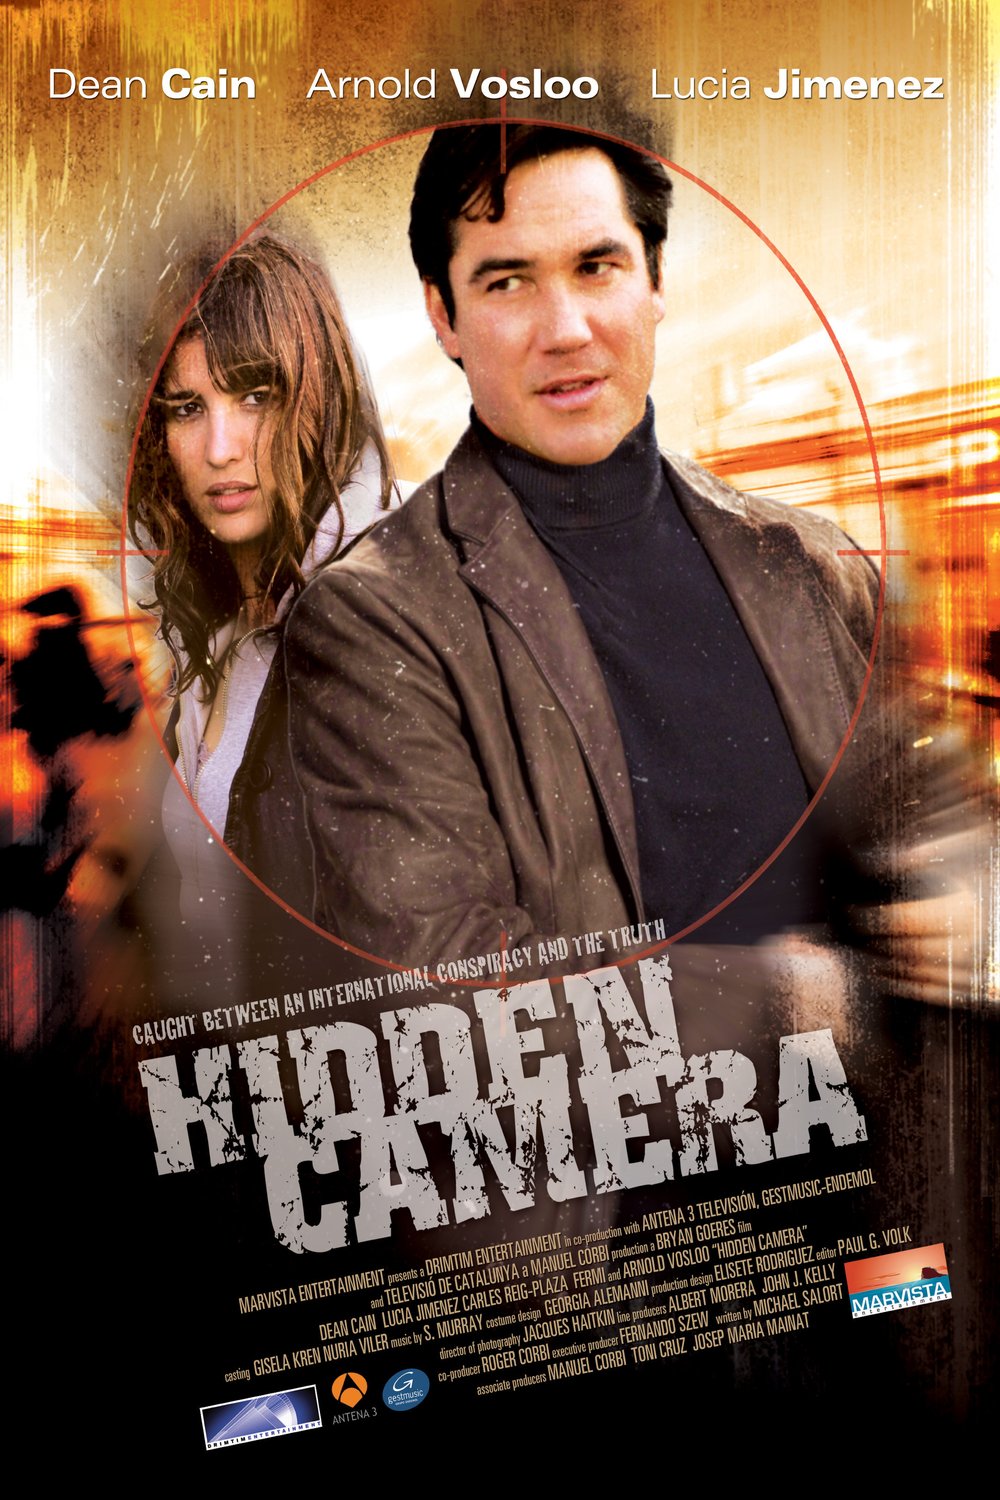 Poster of the movie Hidden Camera